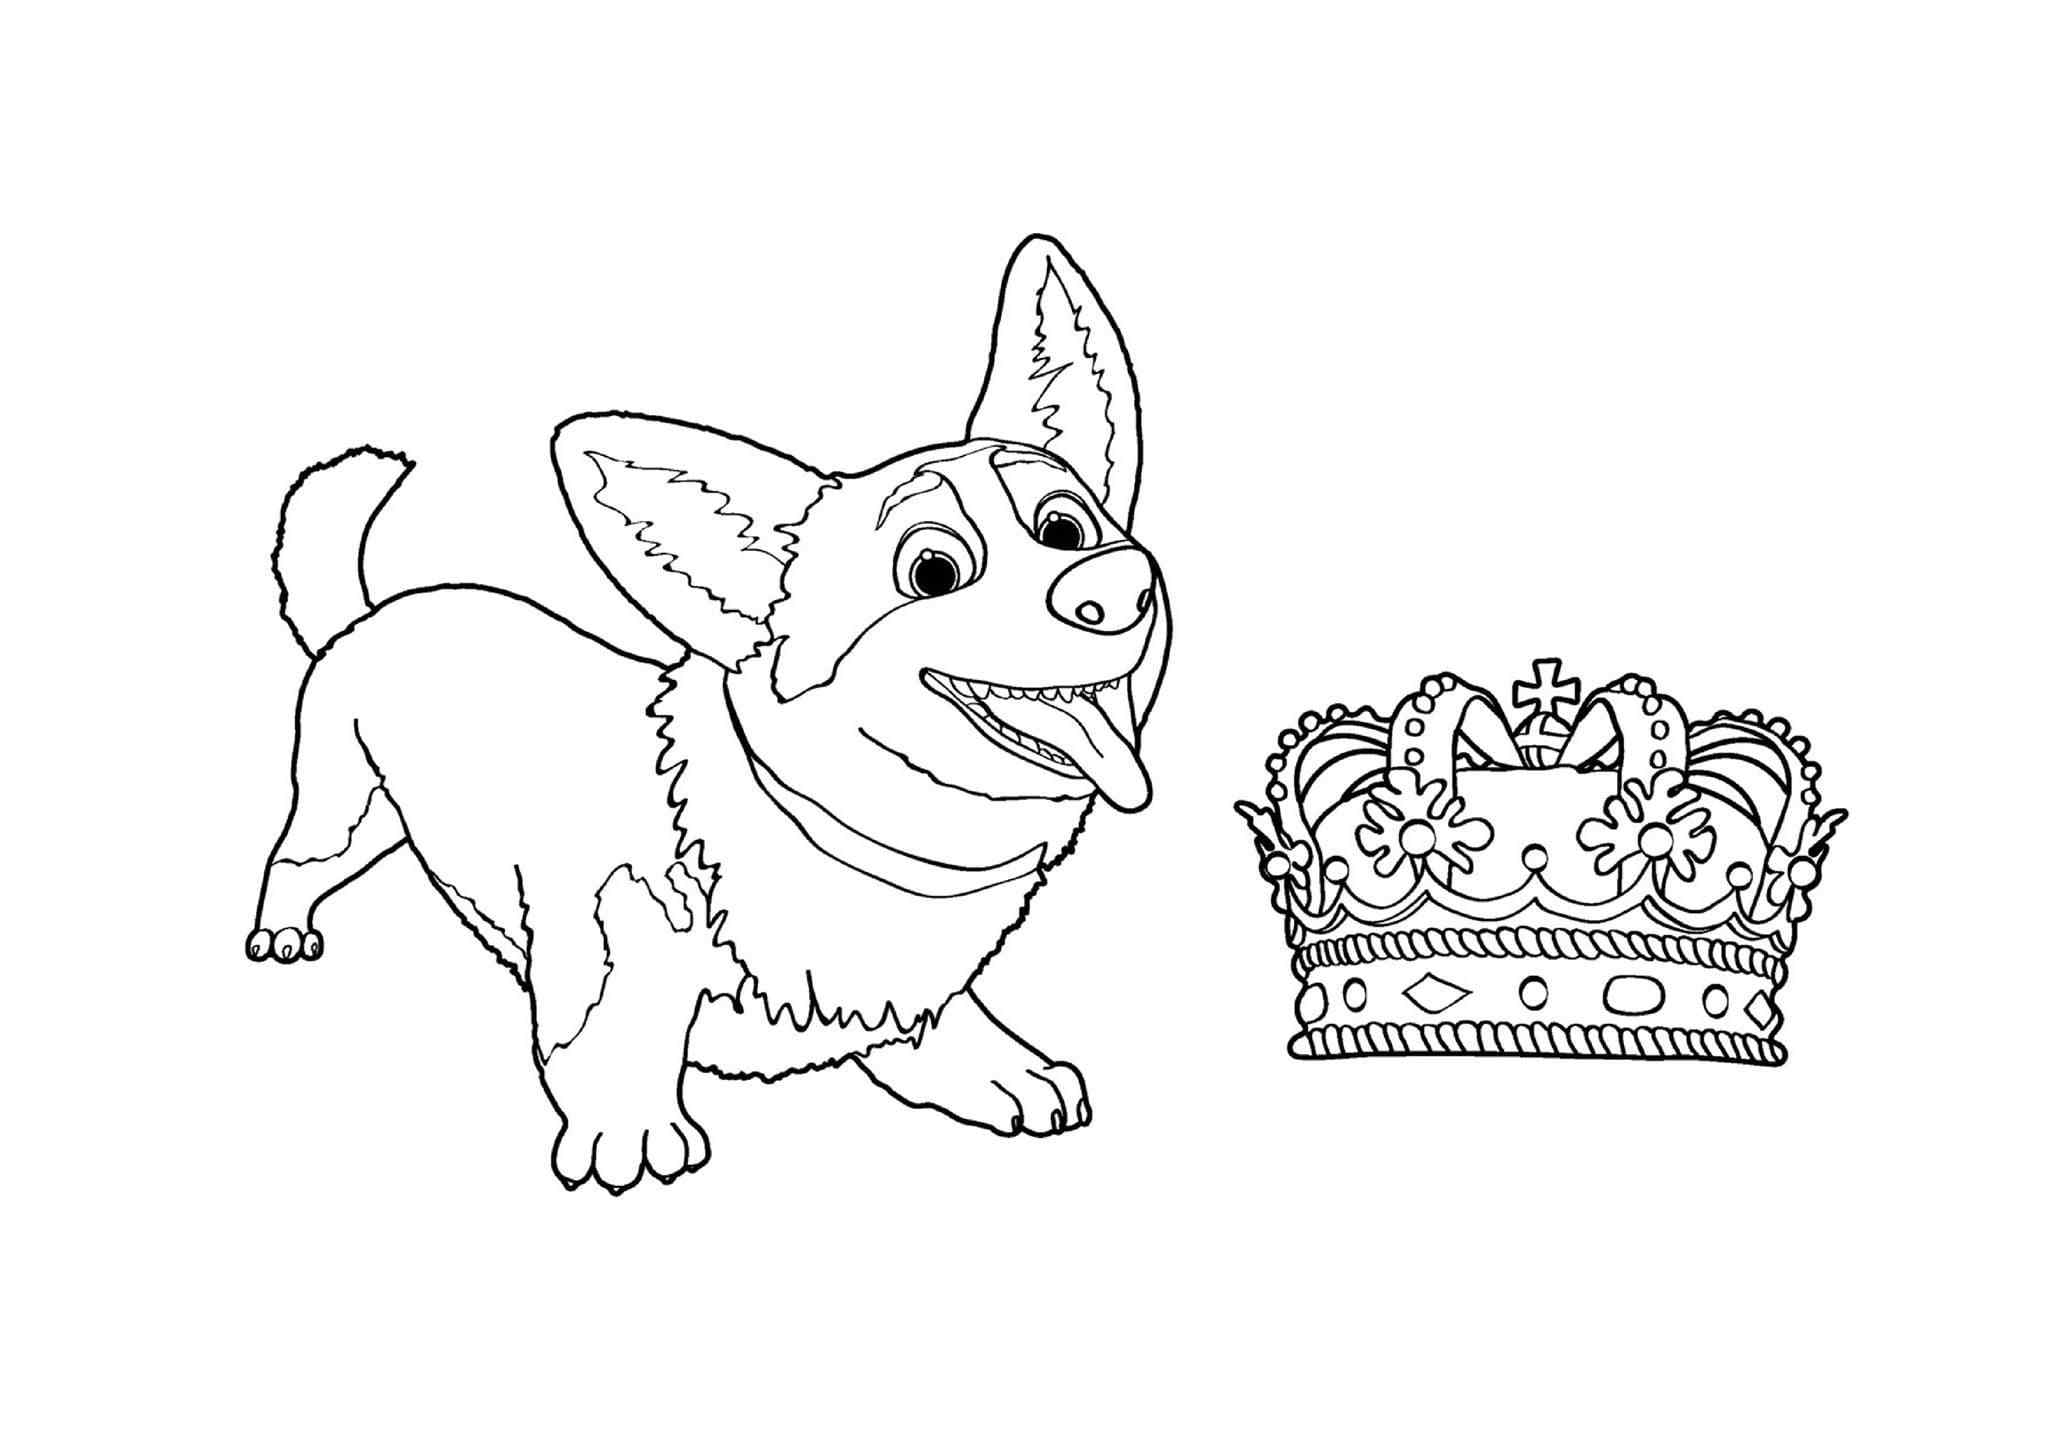 The Royal Crown Of The Royal Dog